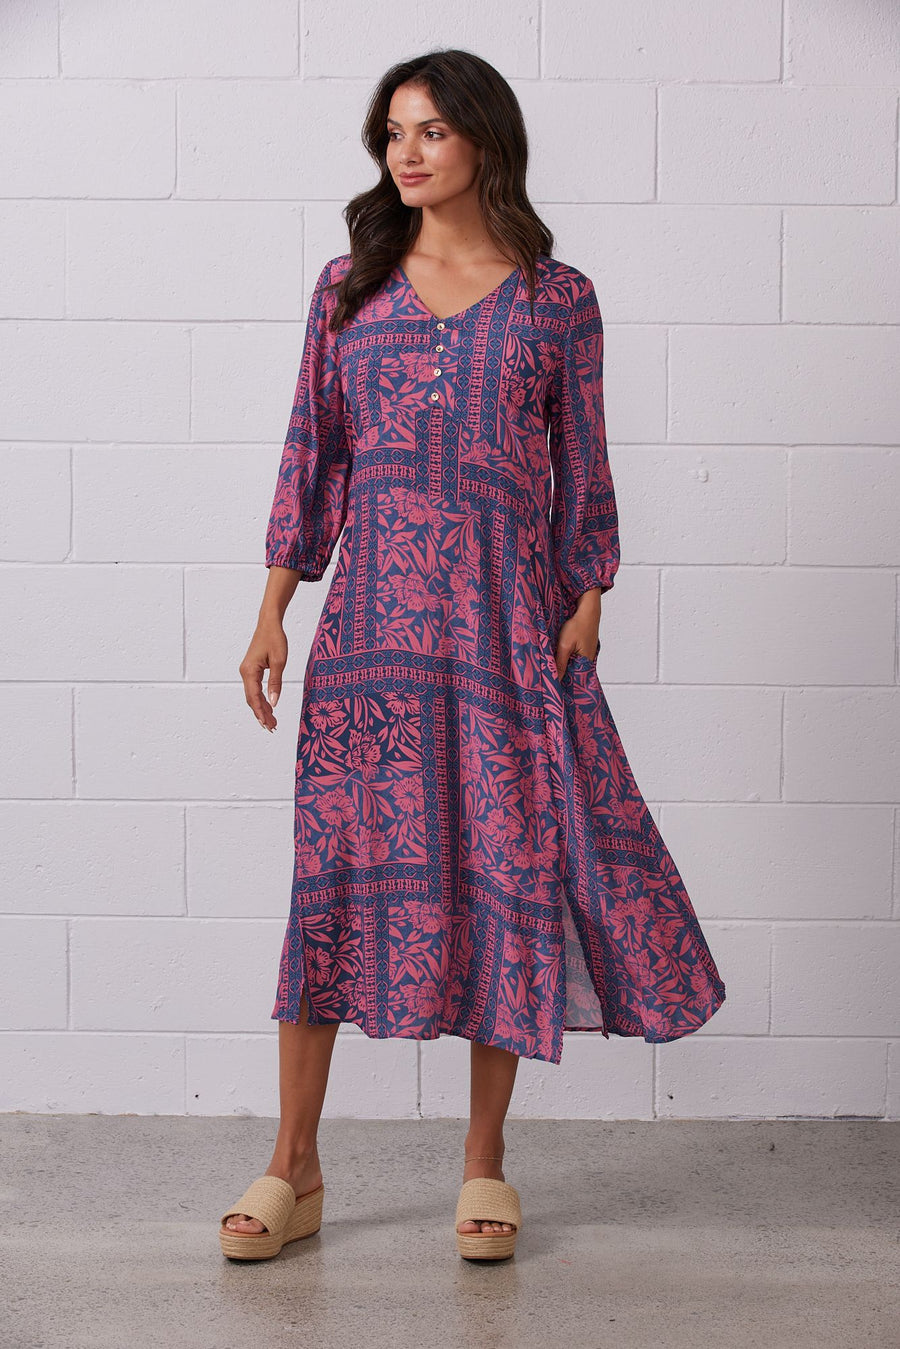 Newport Marocco Dress